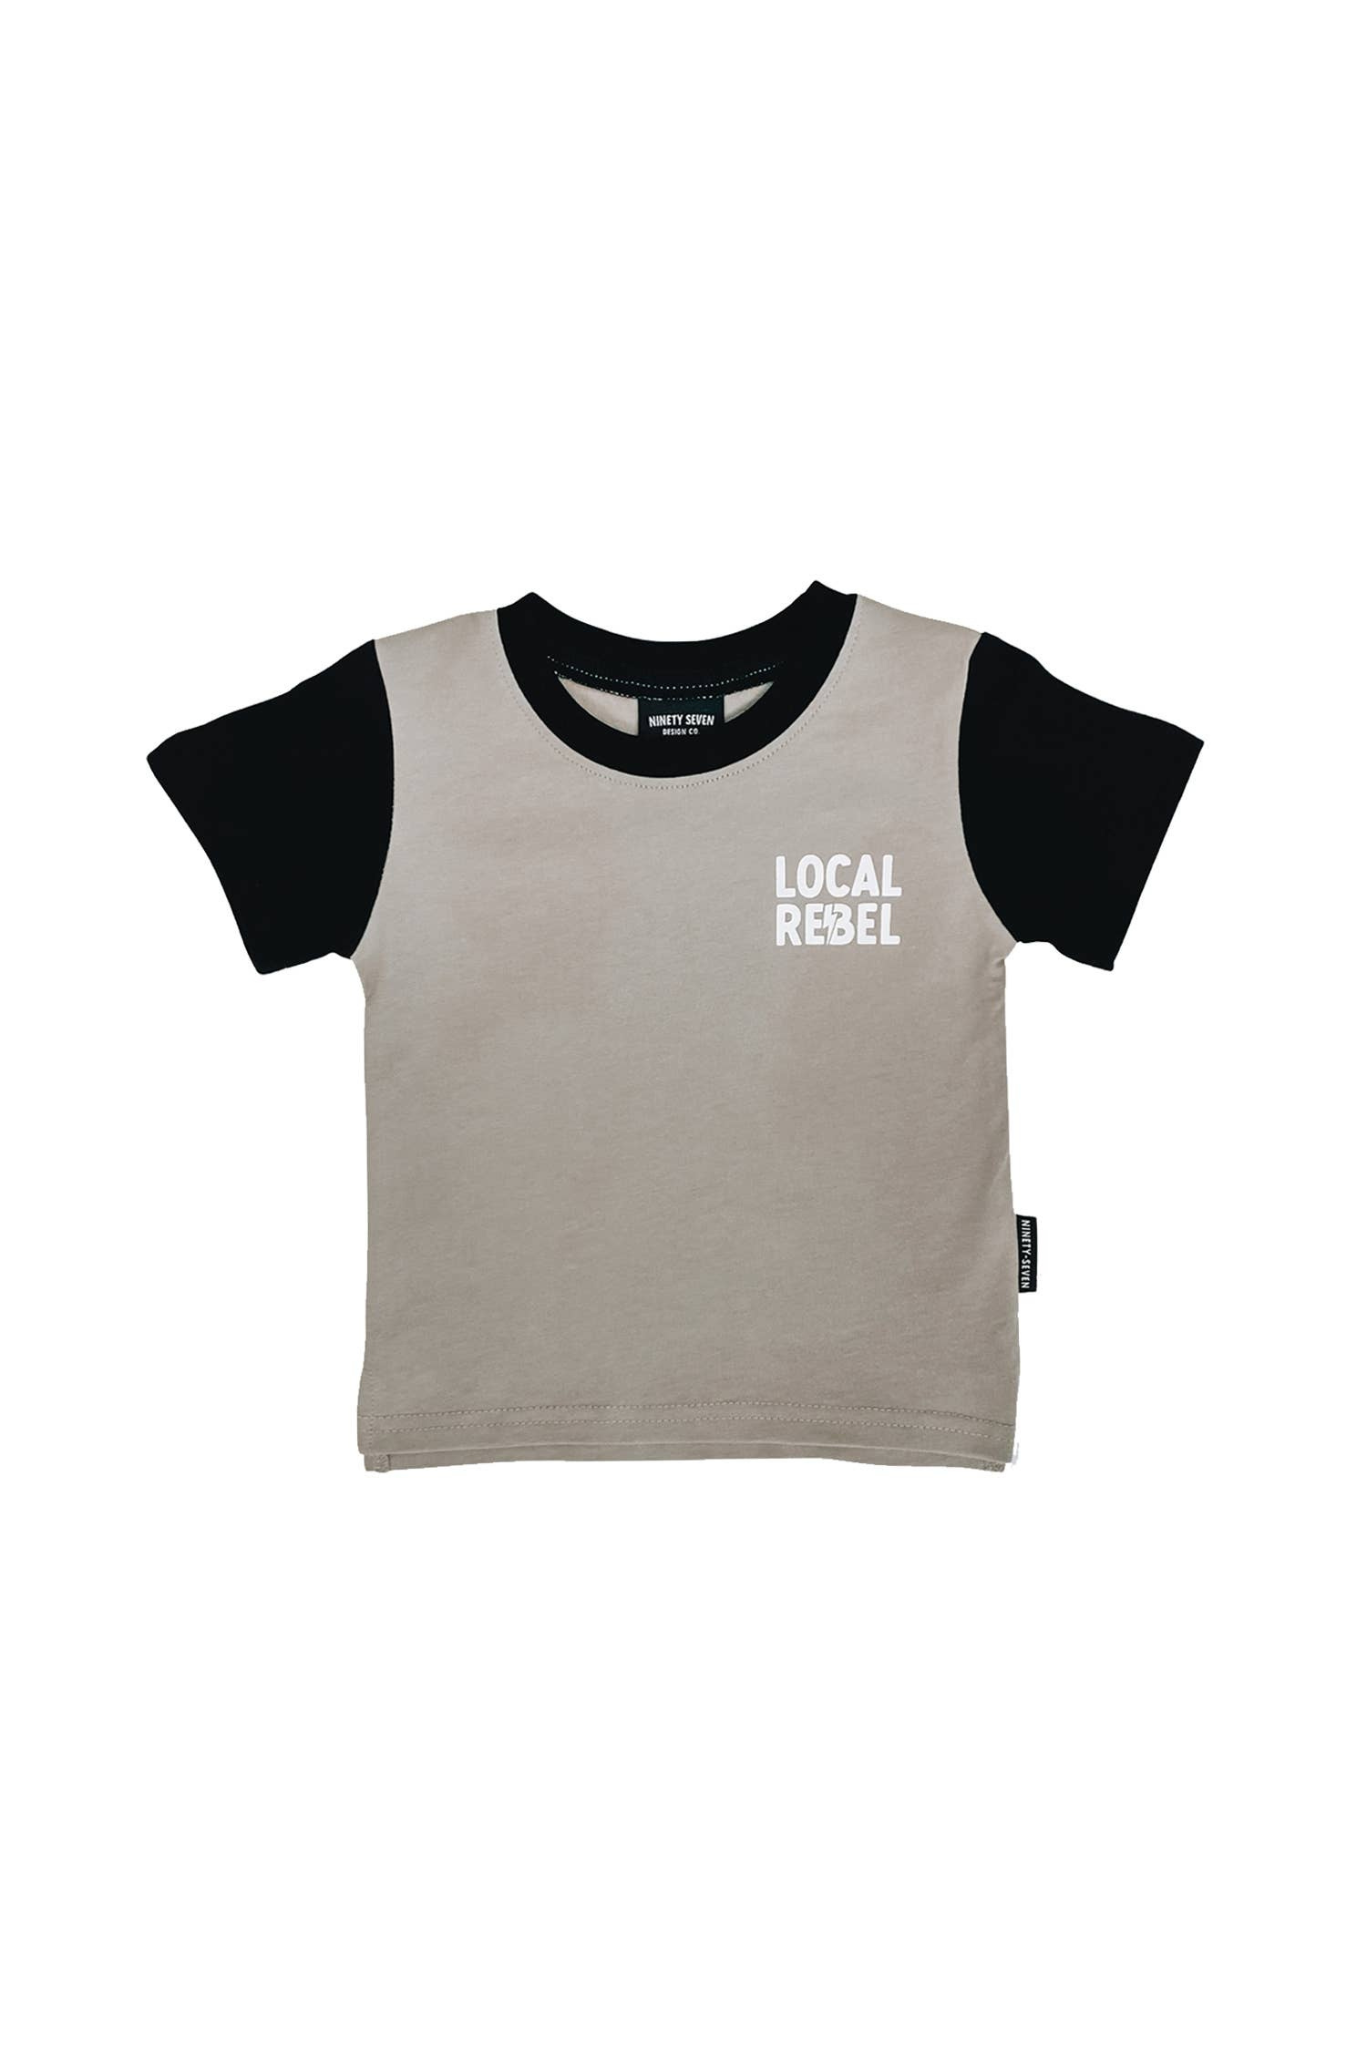 97 Design Co. - Local Rebel - Color Block Kids Tee, Toddler T-shirt Boys